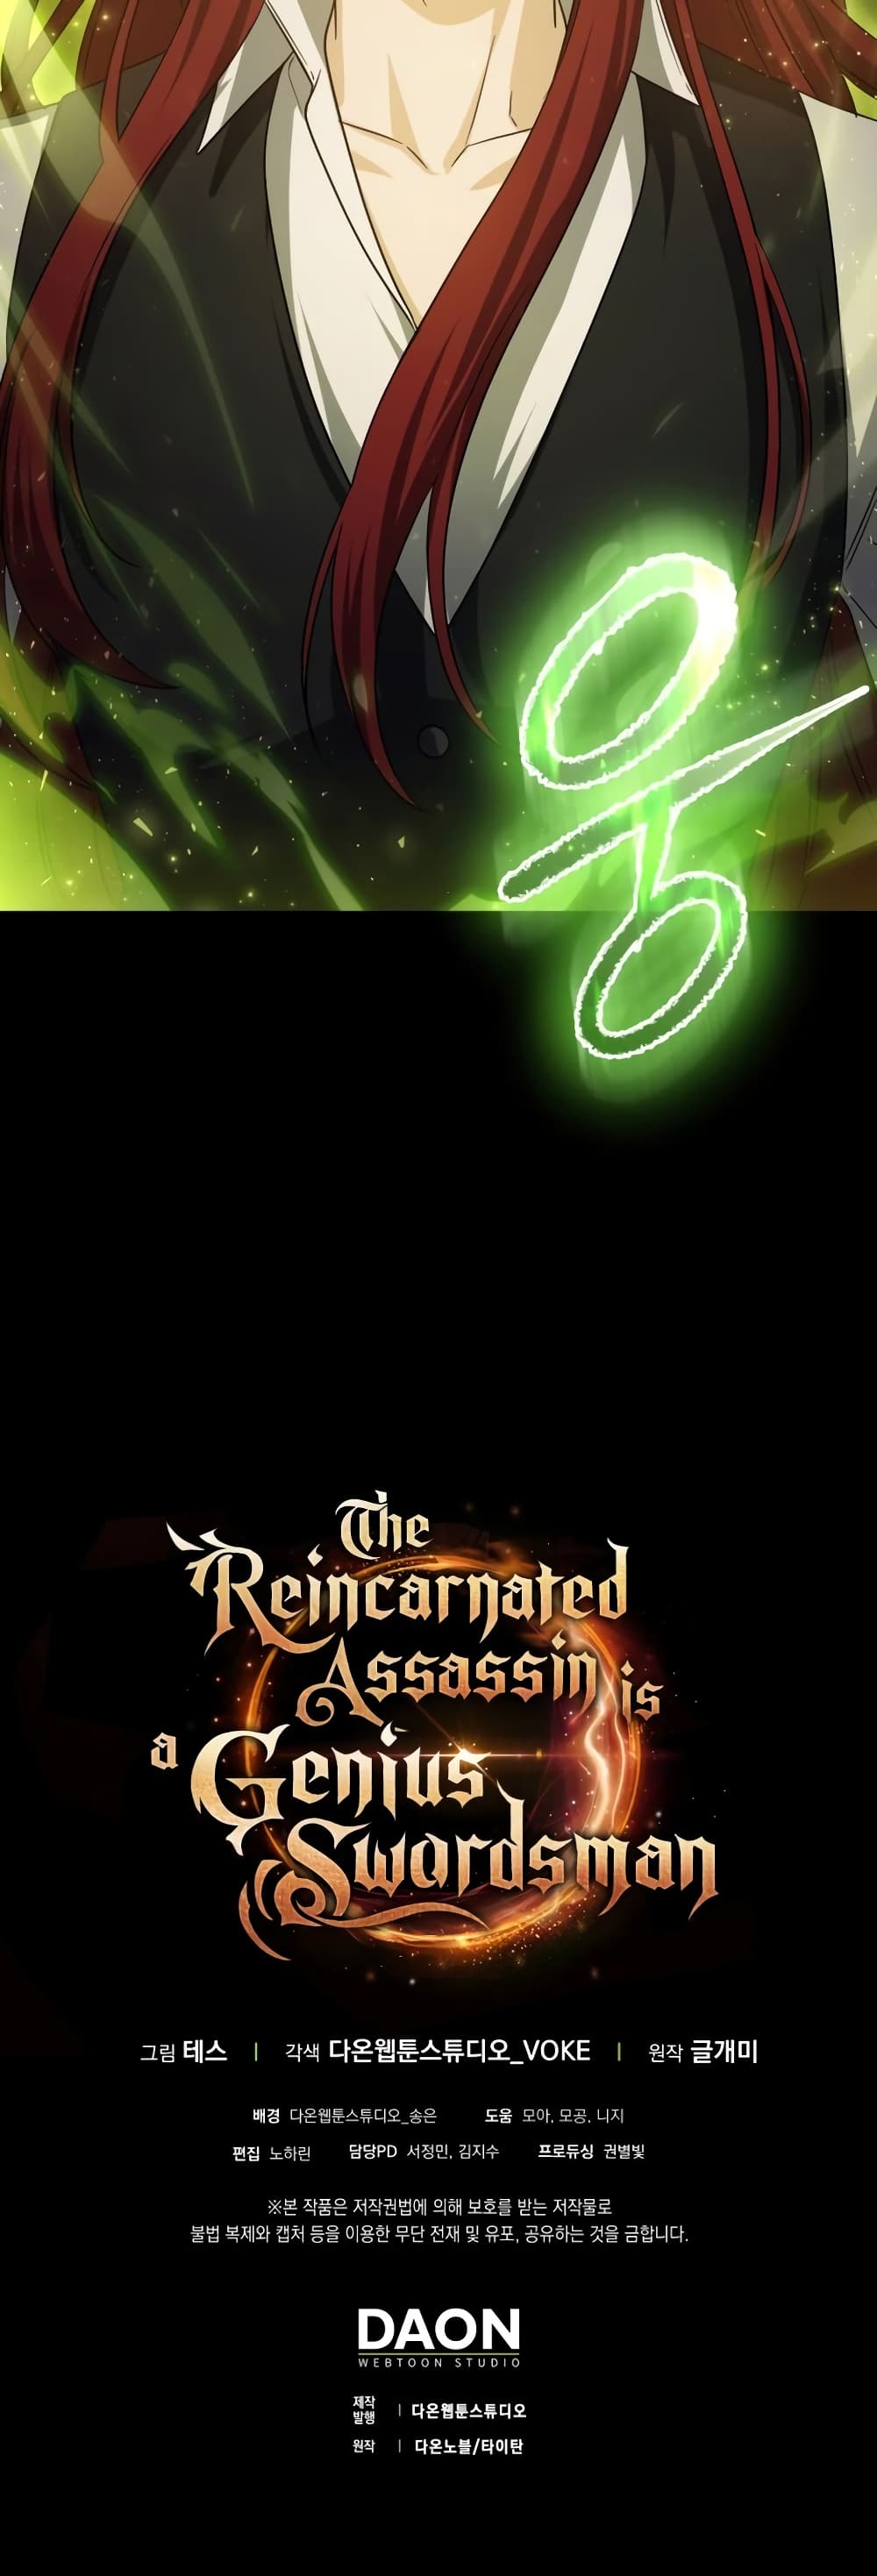 The Reincarnated Assassin is a Genius Swordsman 11-11